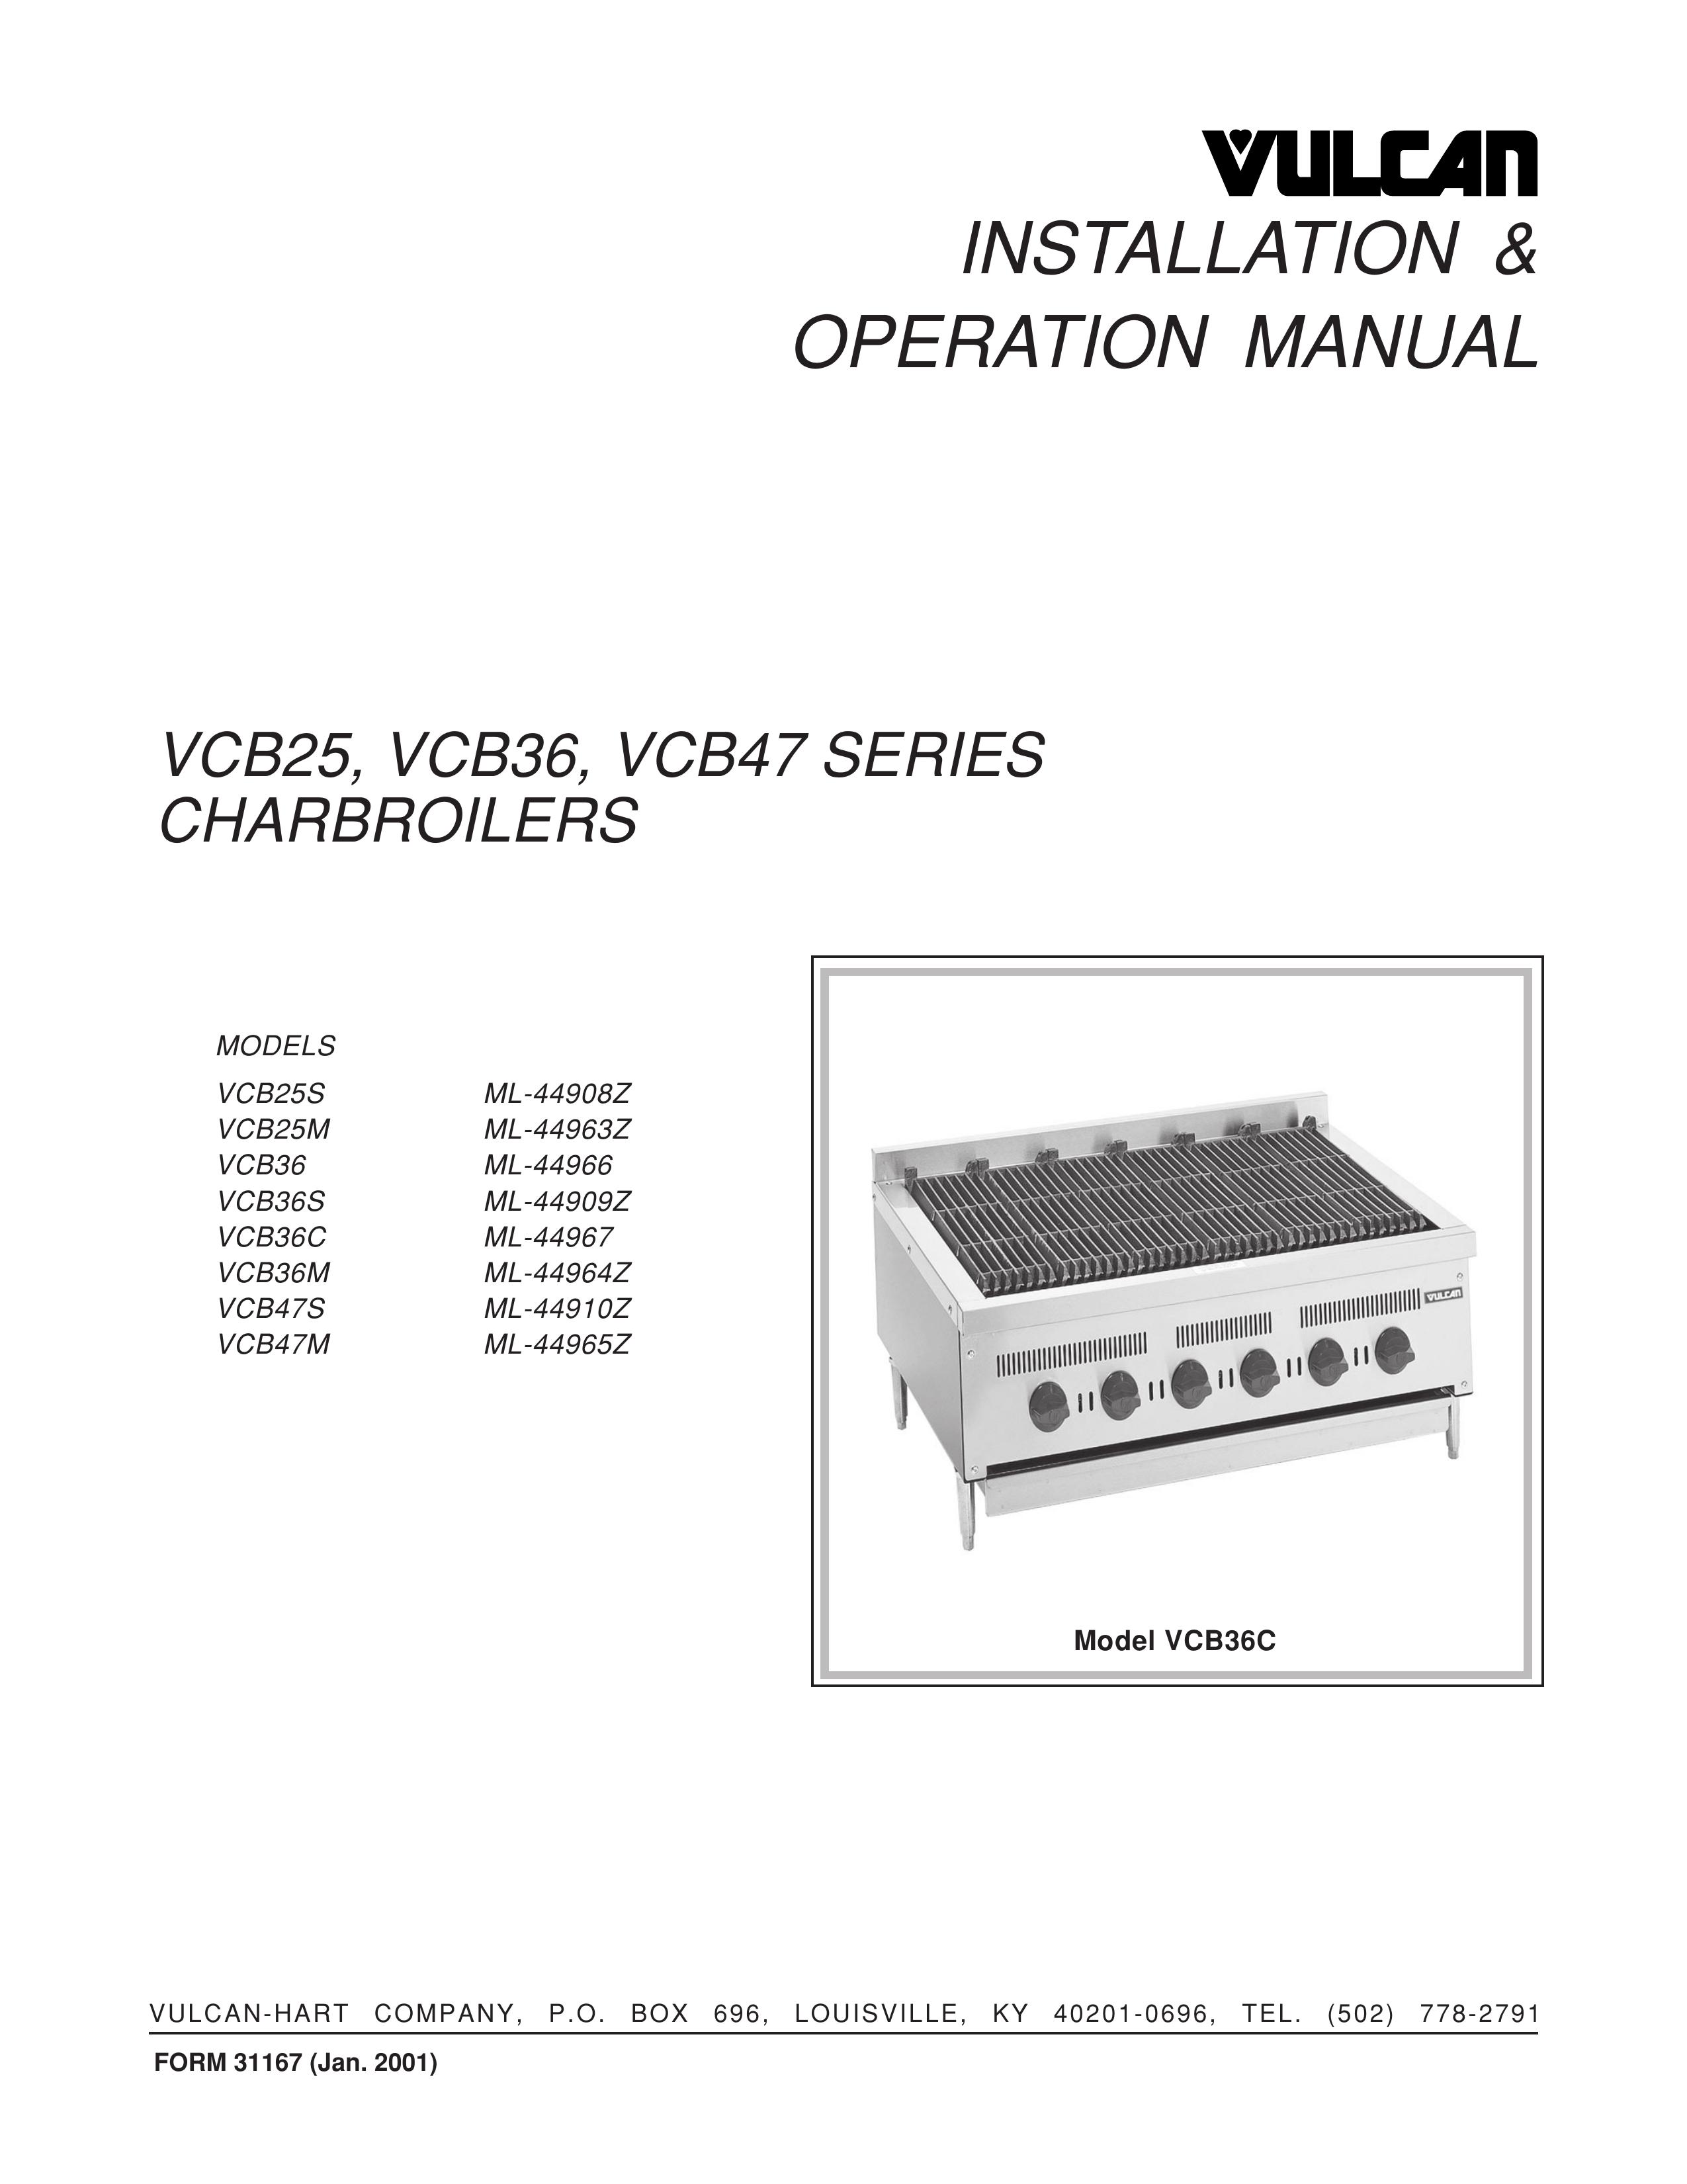 Vulcan-Hart VCB36C ML-44967 Charcoal Grill User Manual